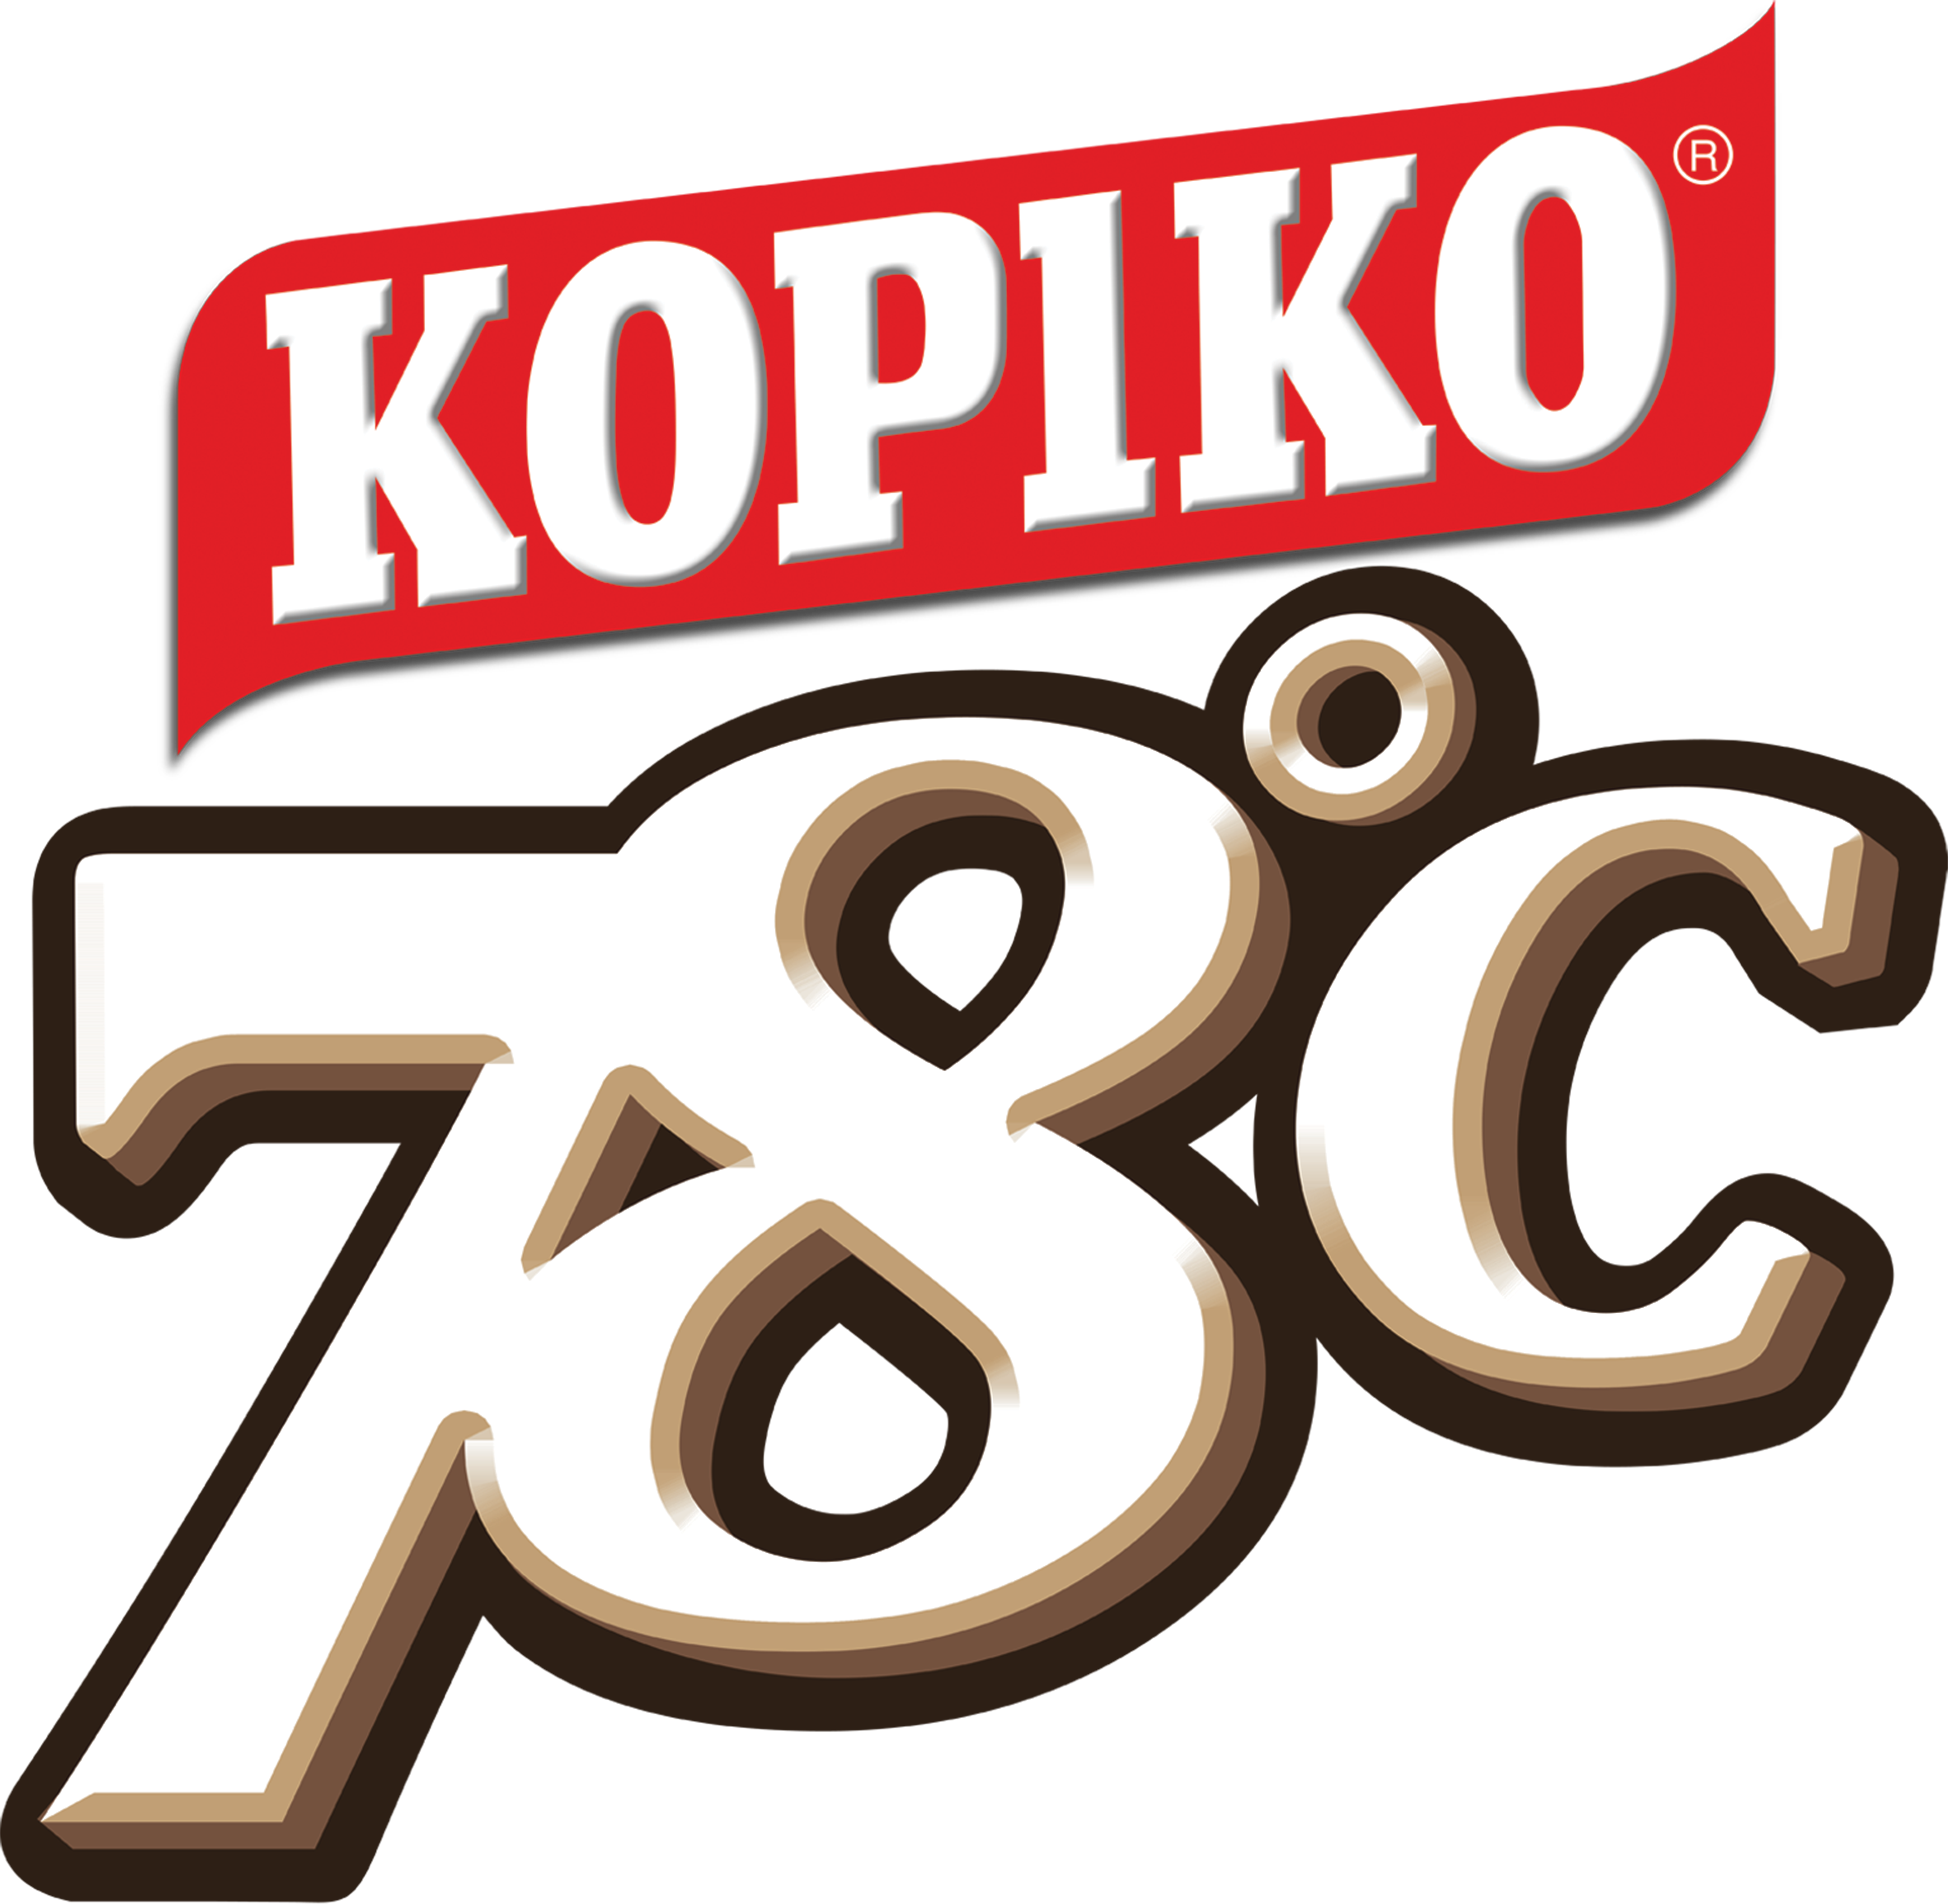 Kopiko 78 Partners With Rappler To Showcase The Brand's - Kopiko Java Coffee 3in1 (6400x6335)